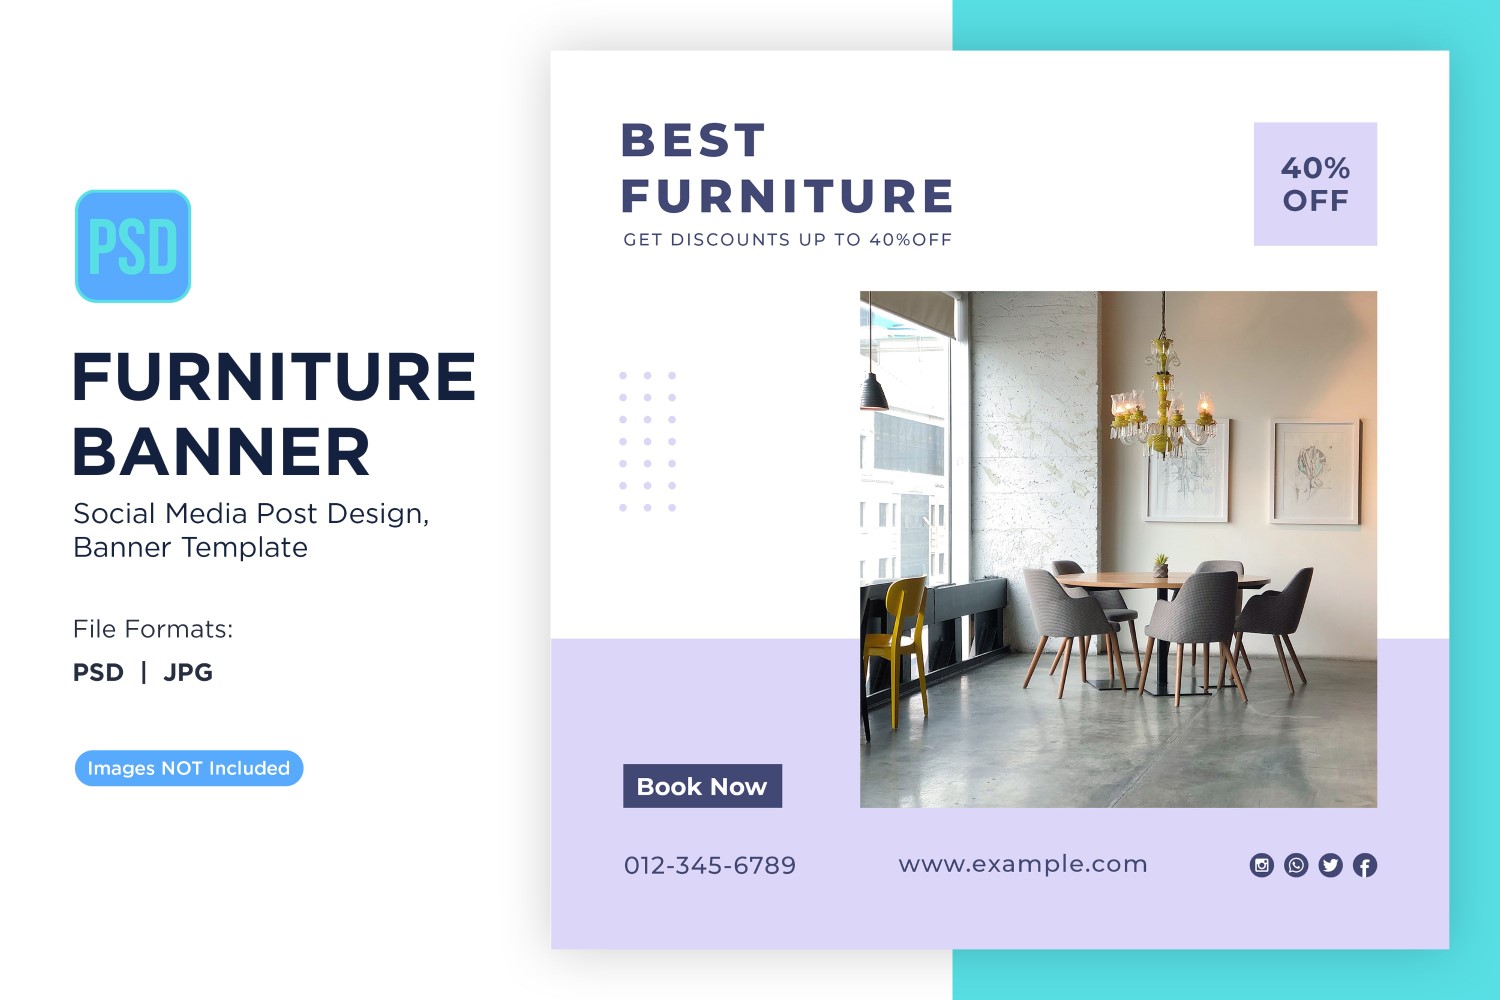 Best Furniture Banner Design Template 2